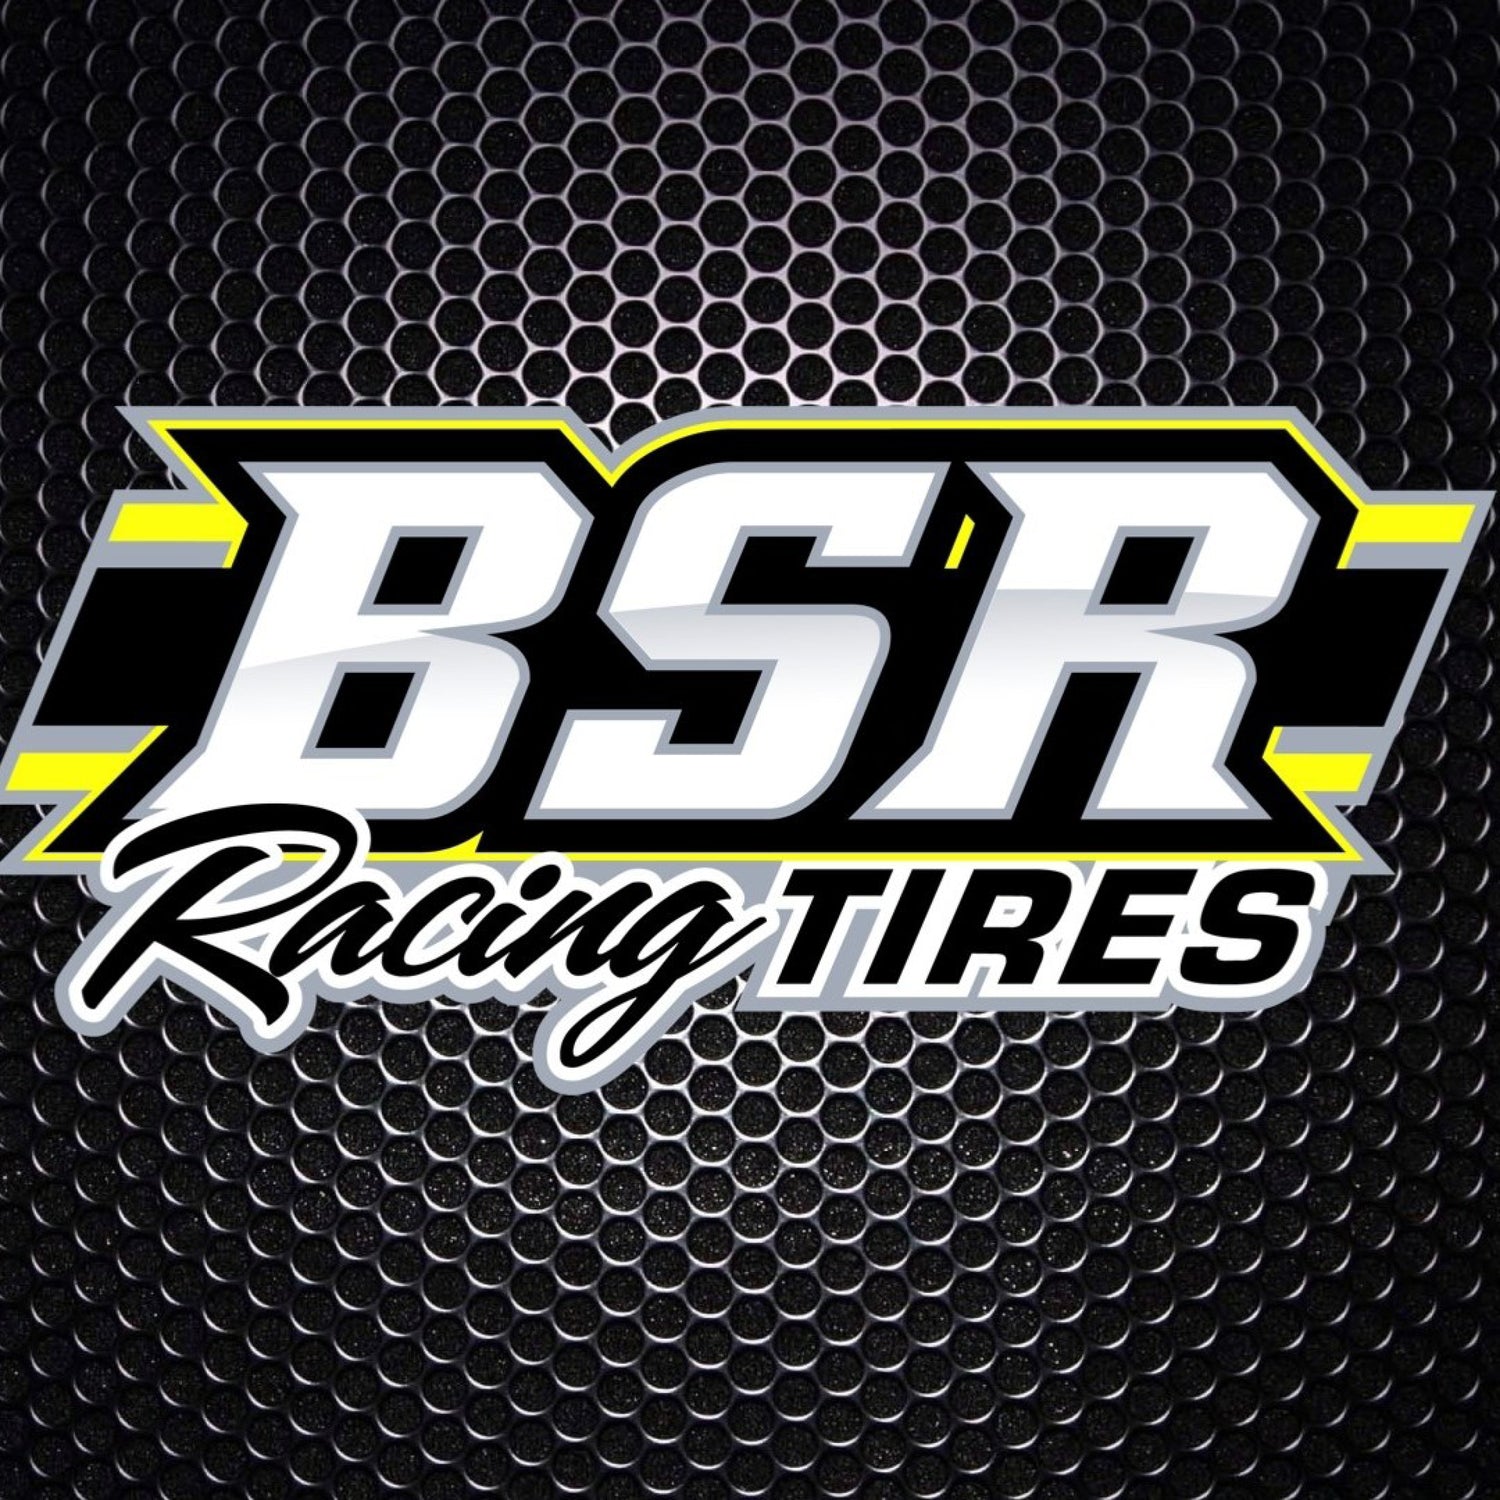 BSR Racing Tires